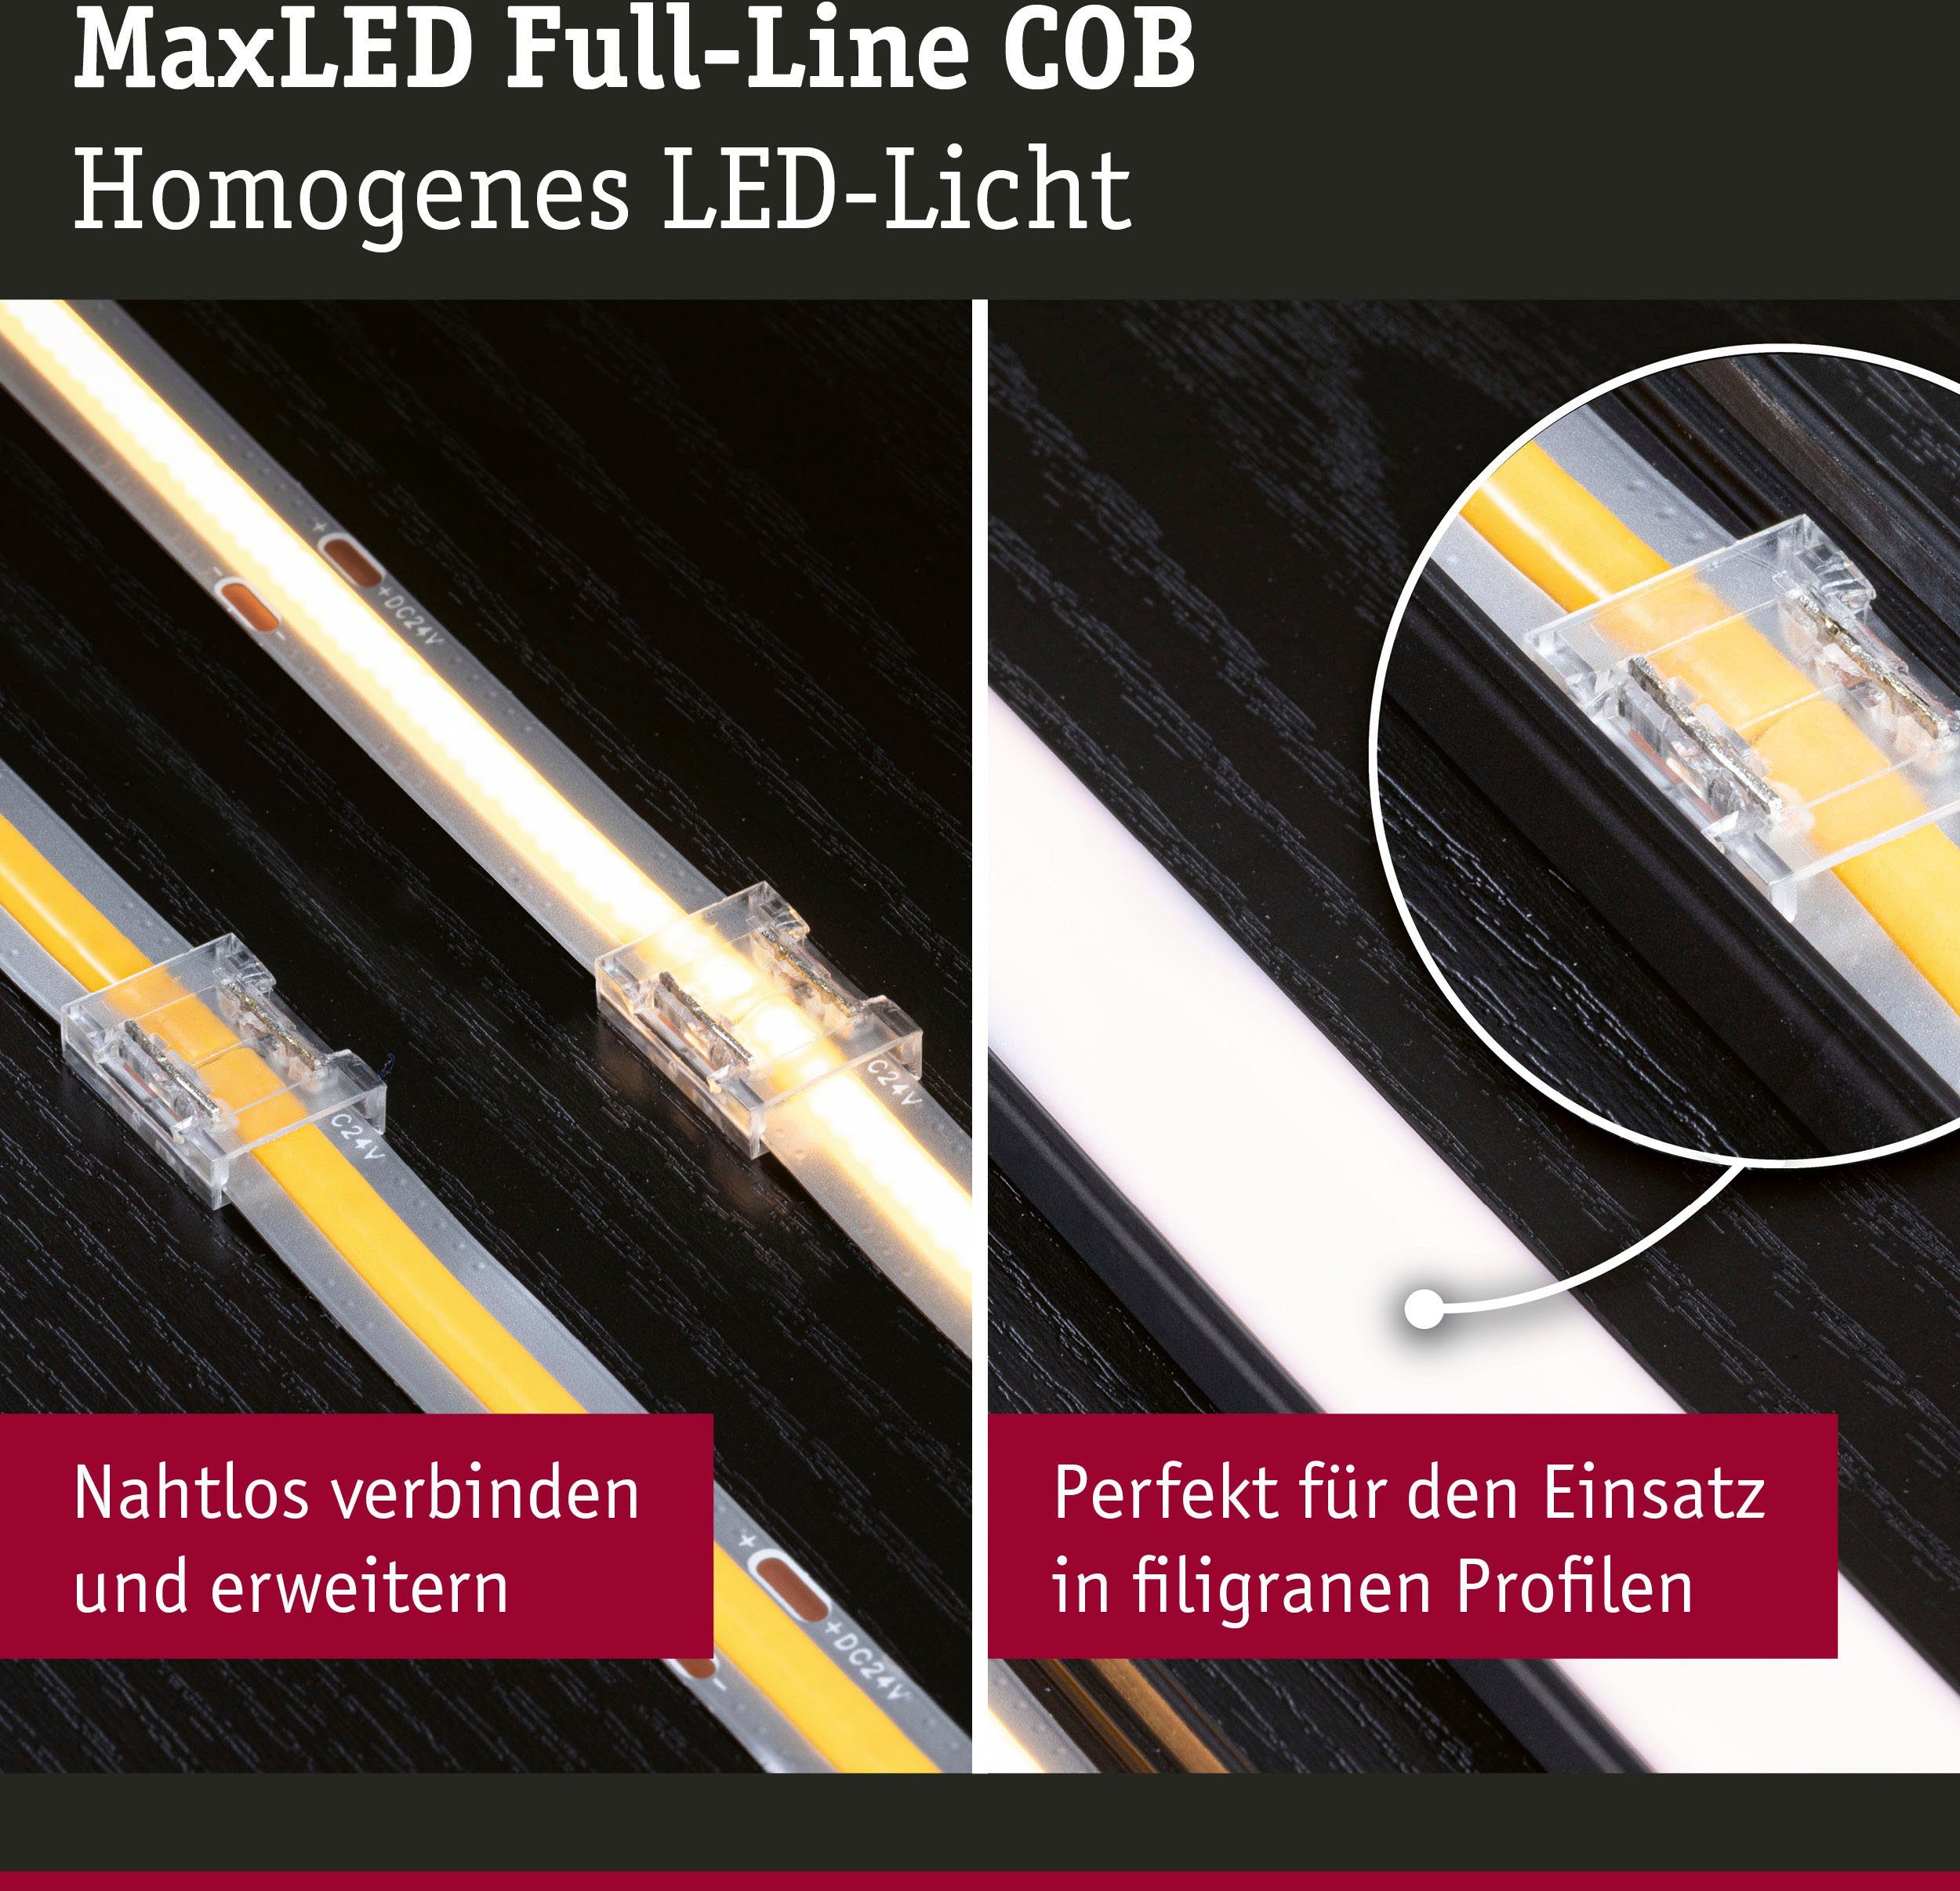 COB 1000 Connector LED-Streifen Set Paulmann MaxLED 2er-Set 133m Full-Line